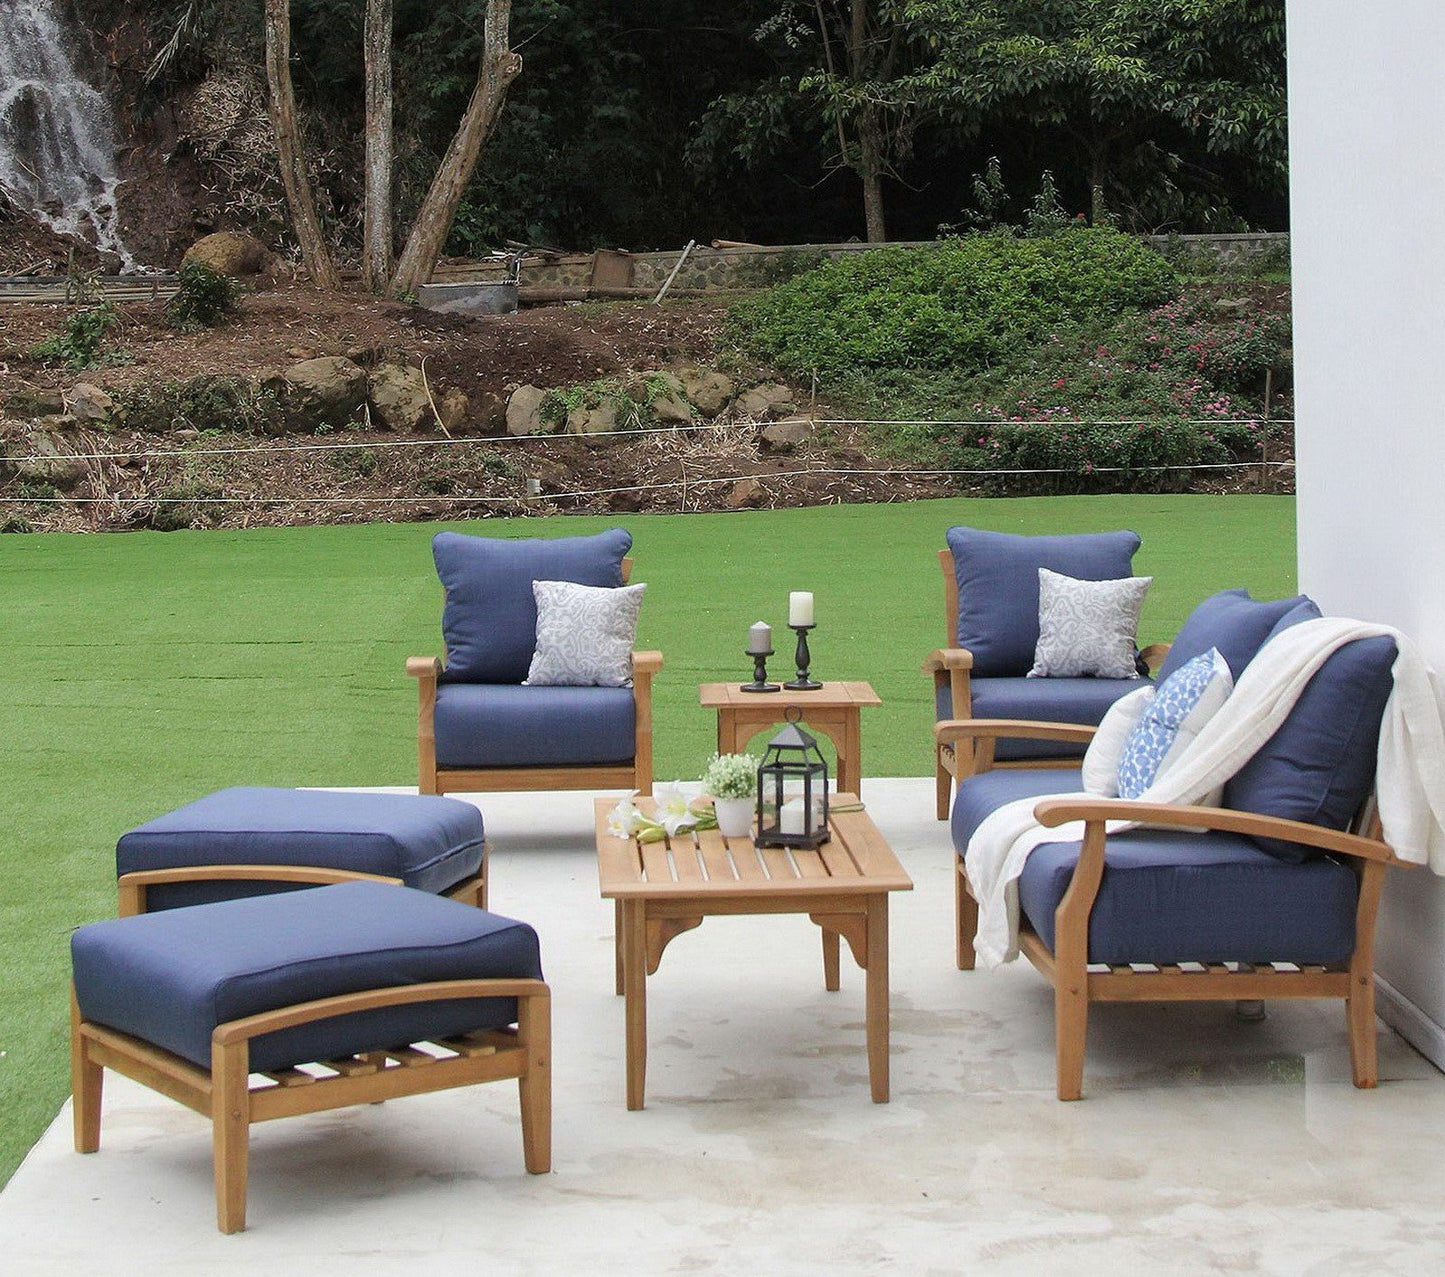 New 7 Piece Teak Wood Outdoor Patio Seating Set Garden Furniture Blue Cushions